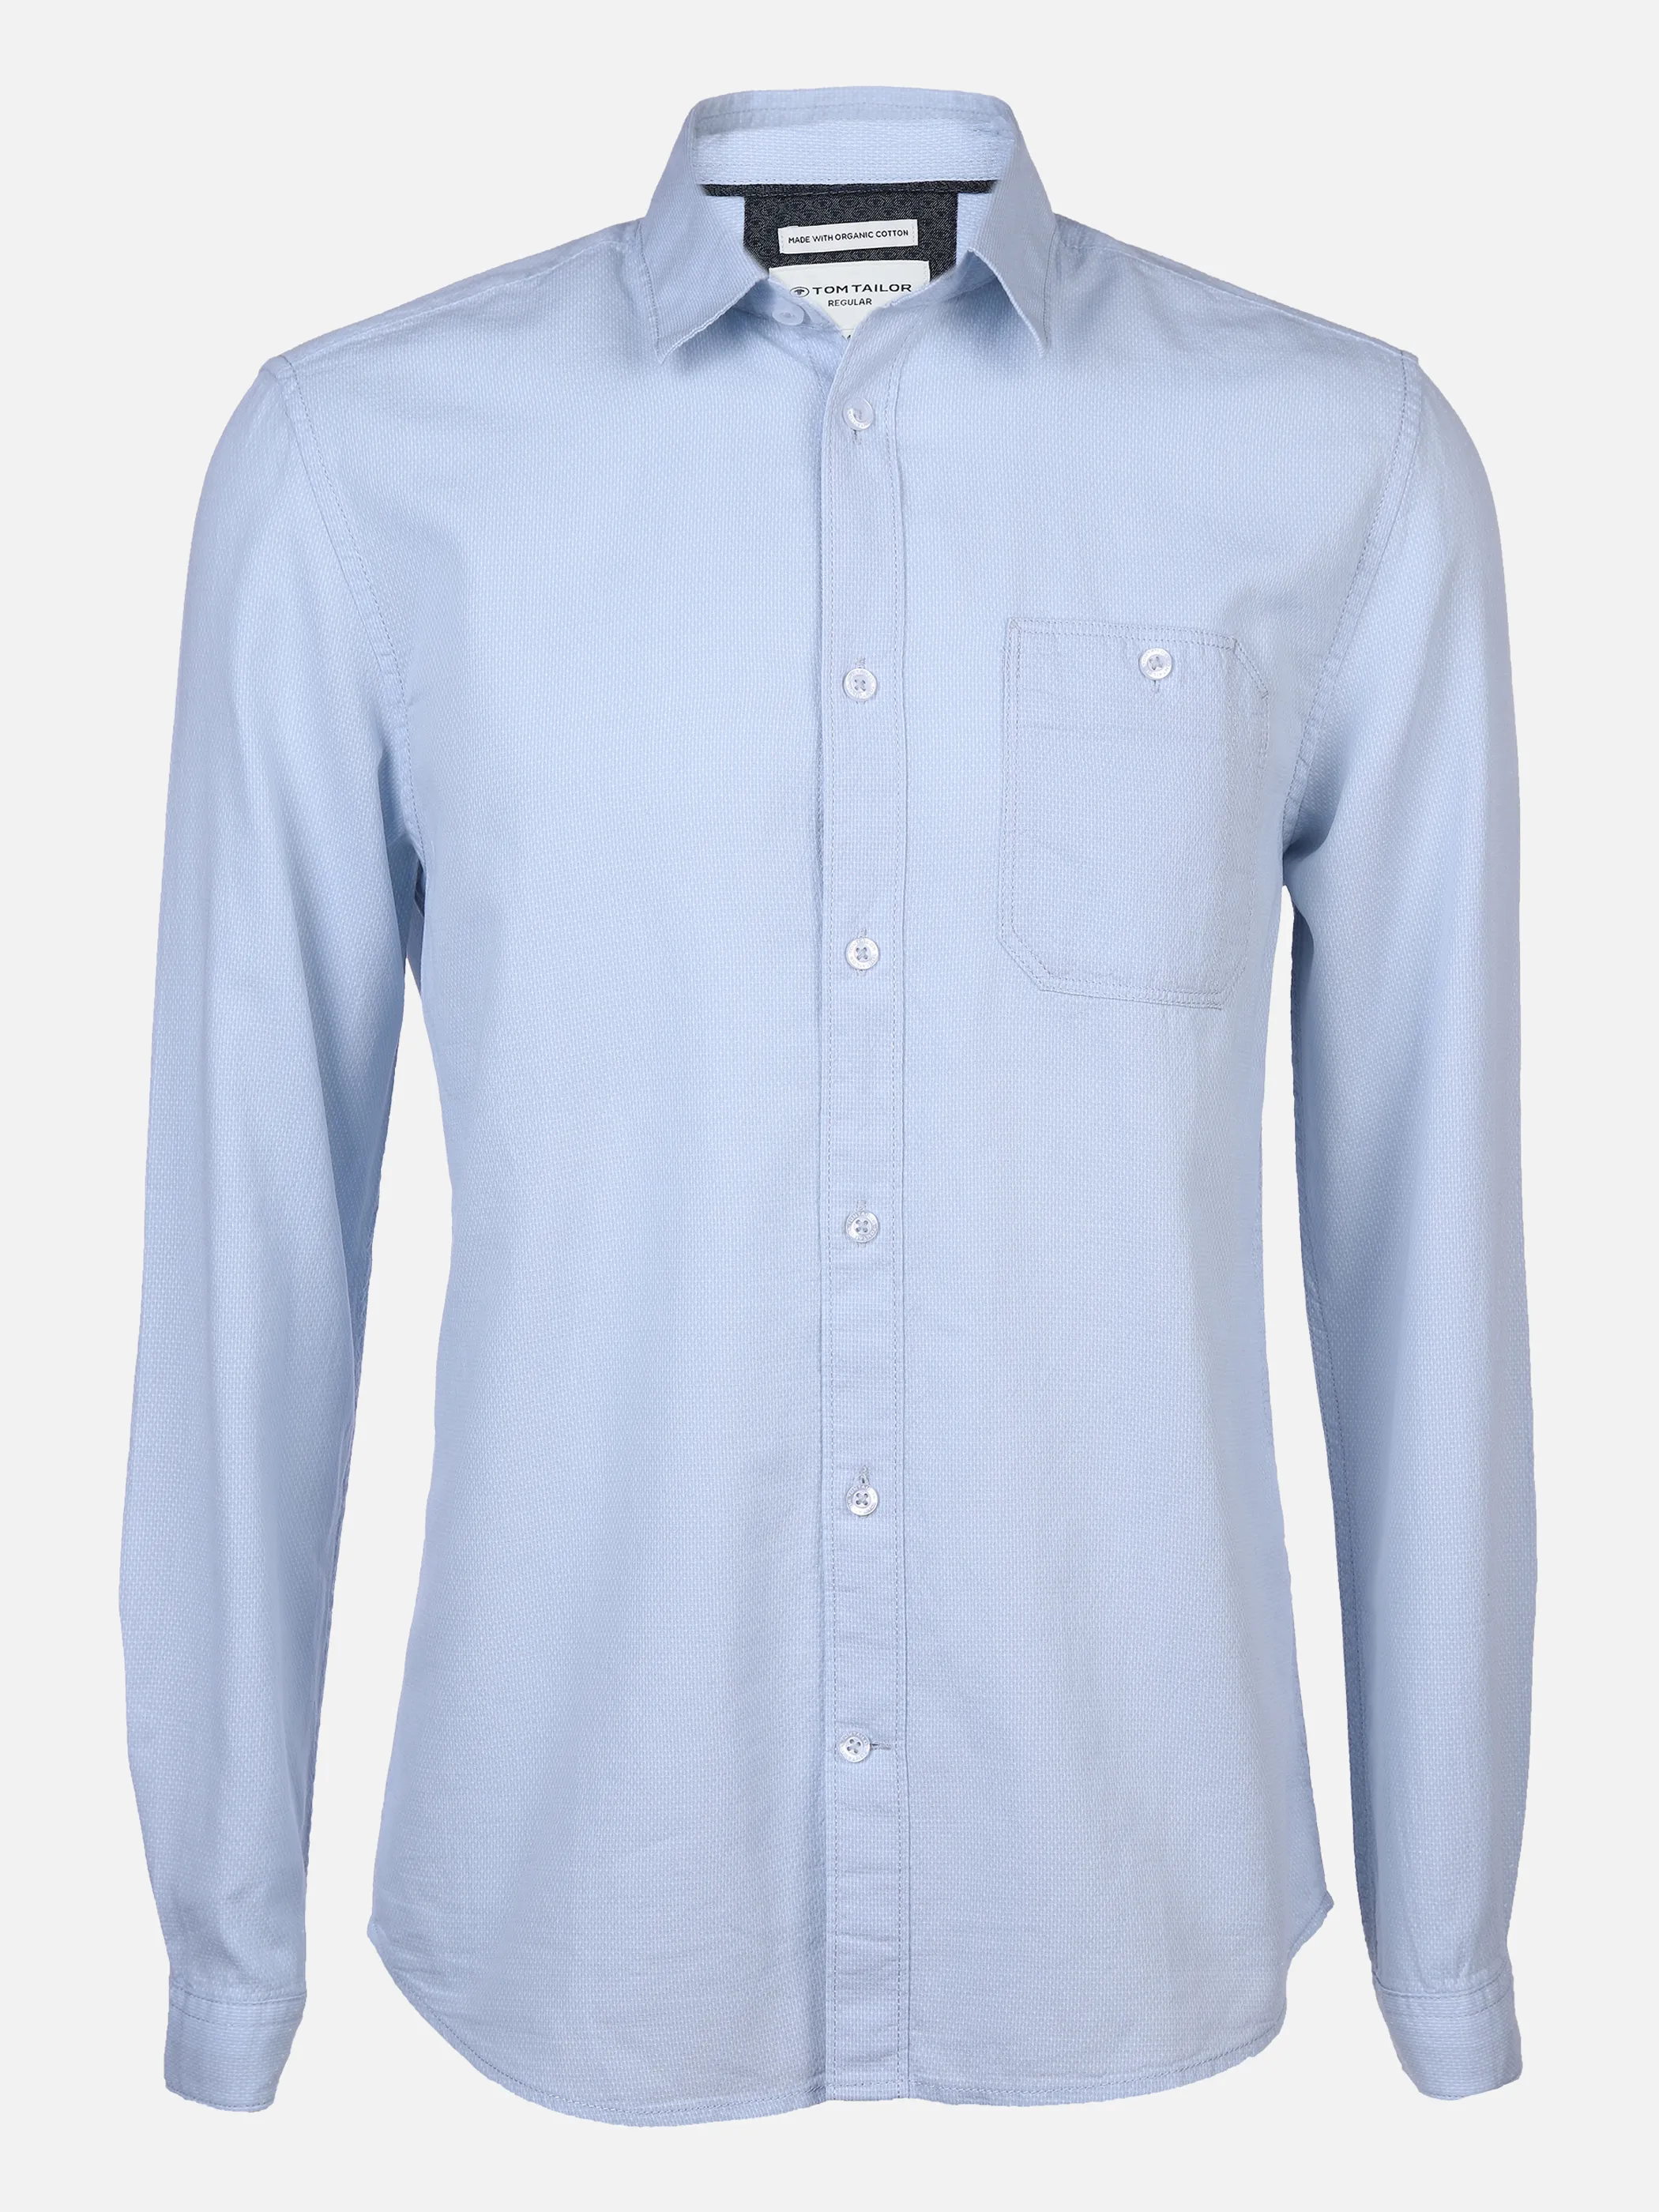 Tom Tailor 1032342 NOS structured shirt Blau 869514 30159 1